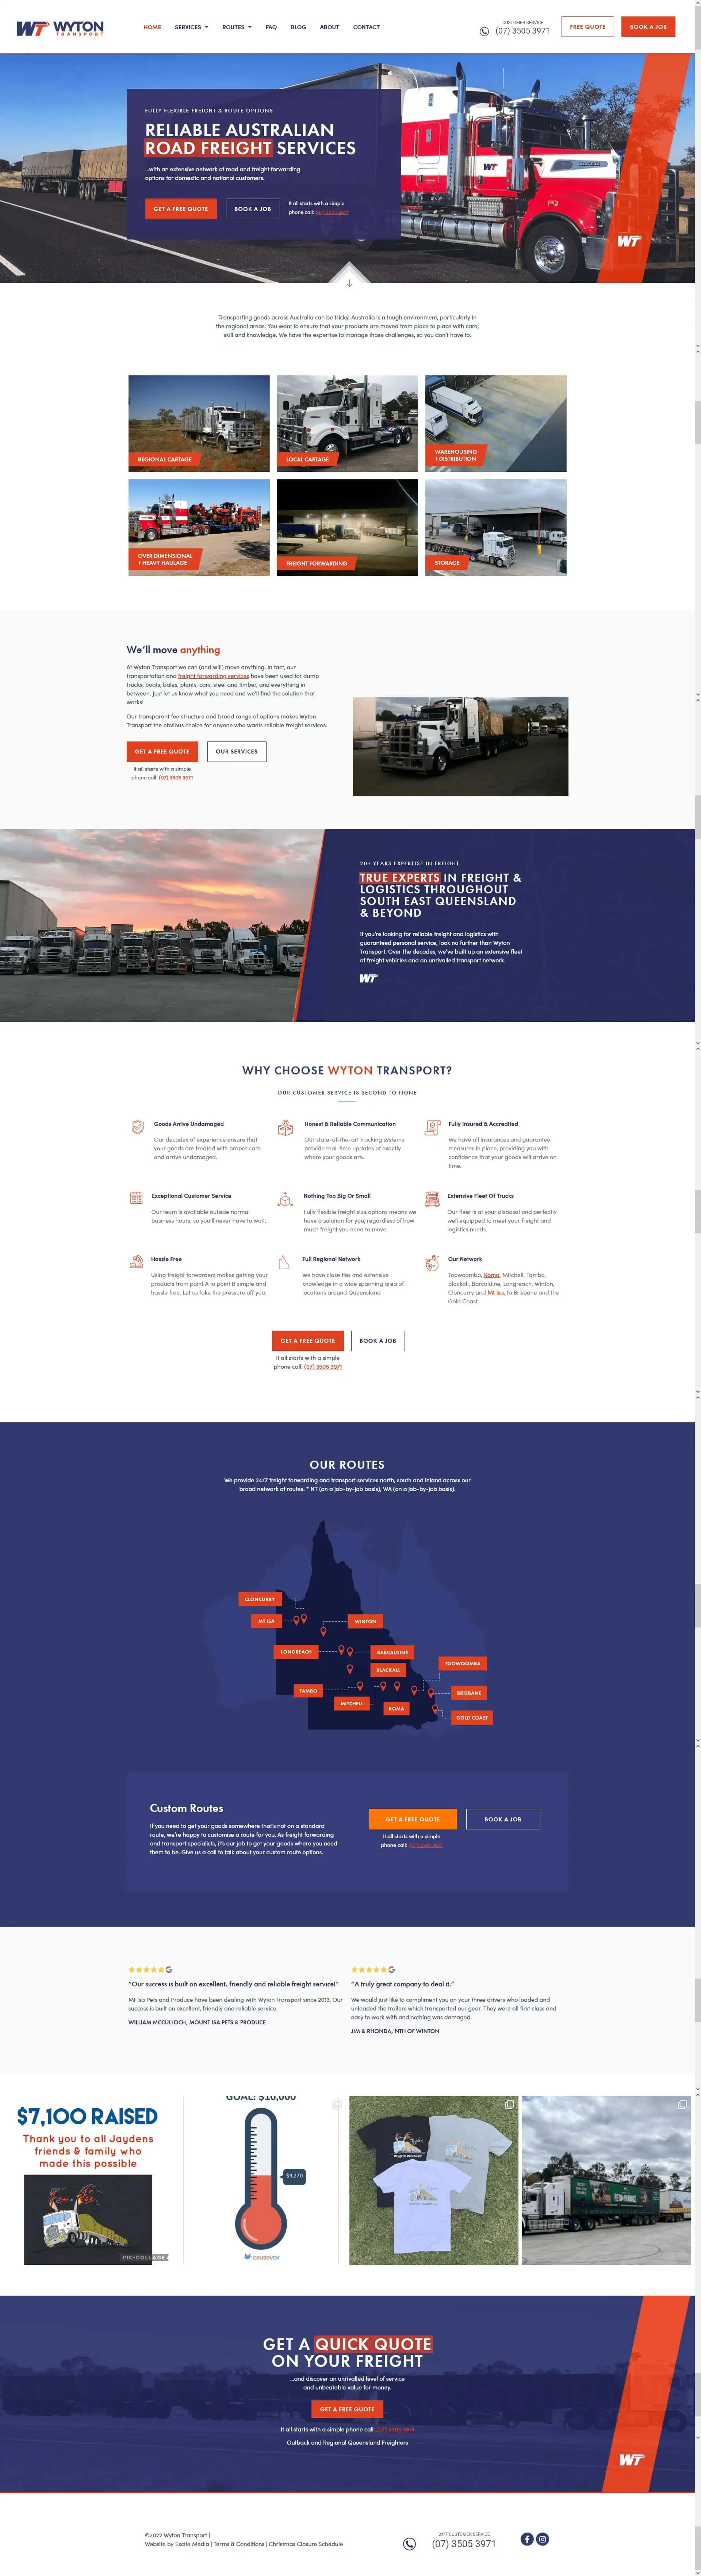 Wyton Transport homepage design